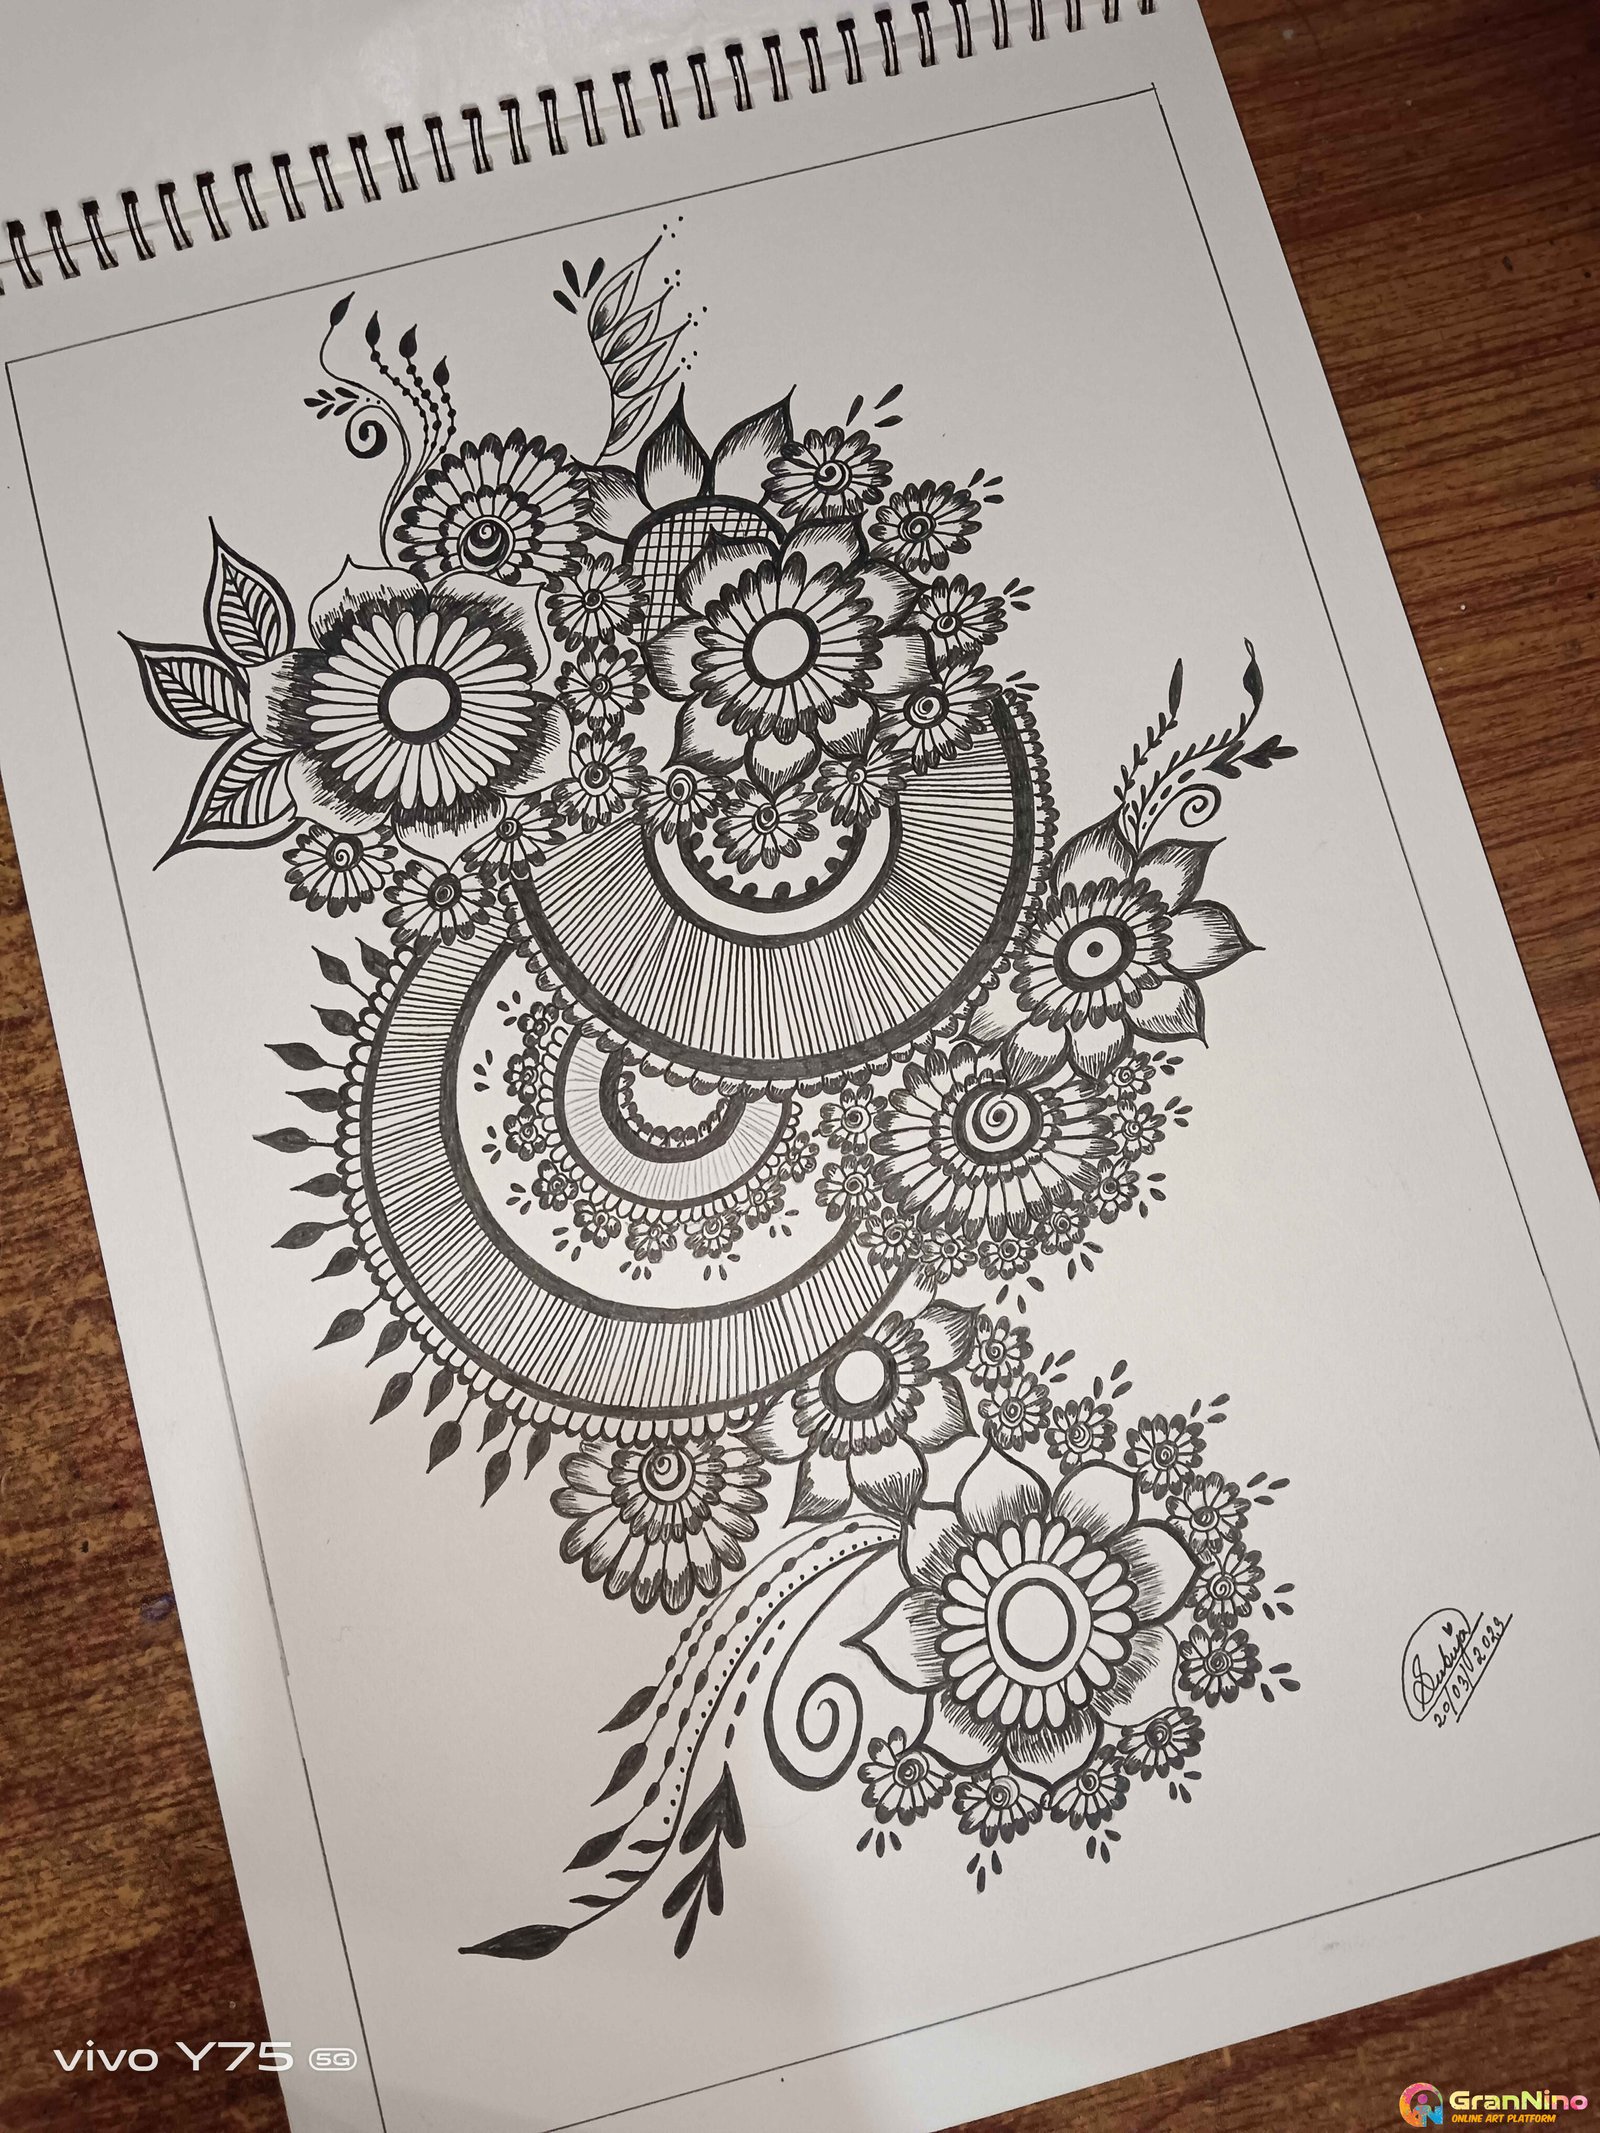 Painting Of Simple Mandala Art In Instagram Size - GranNino